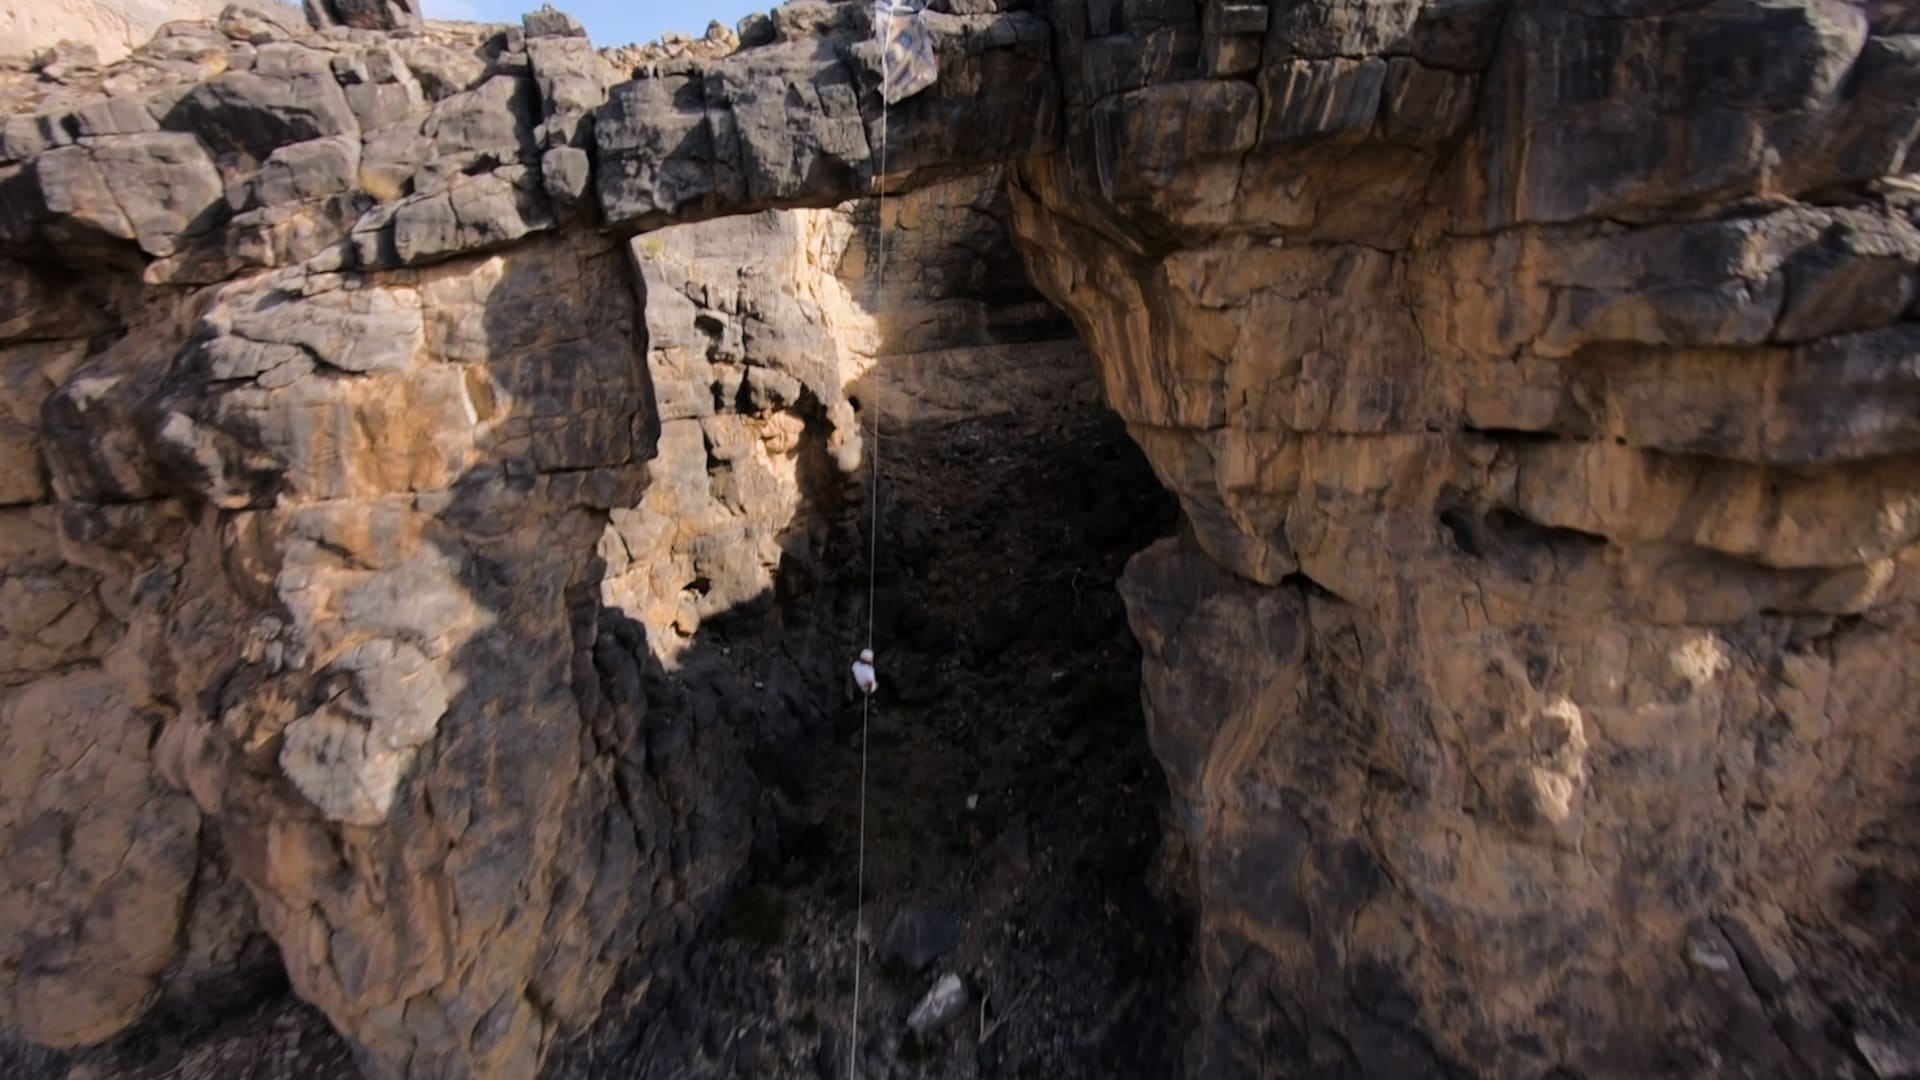 مصور يرصد مغامرًا متعلقًا على قوس صخري بسلطنة عمان ارتفاعه 35 مترًا.. شاهد